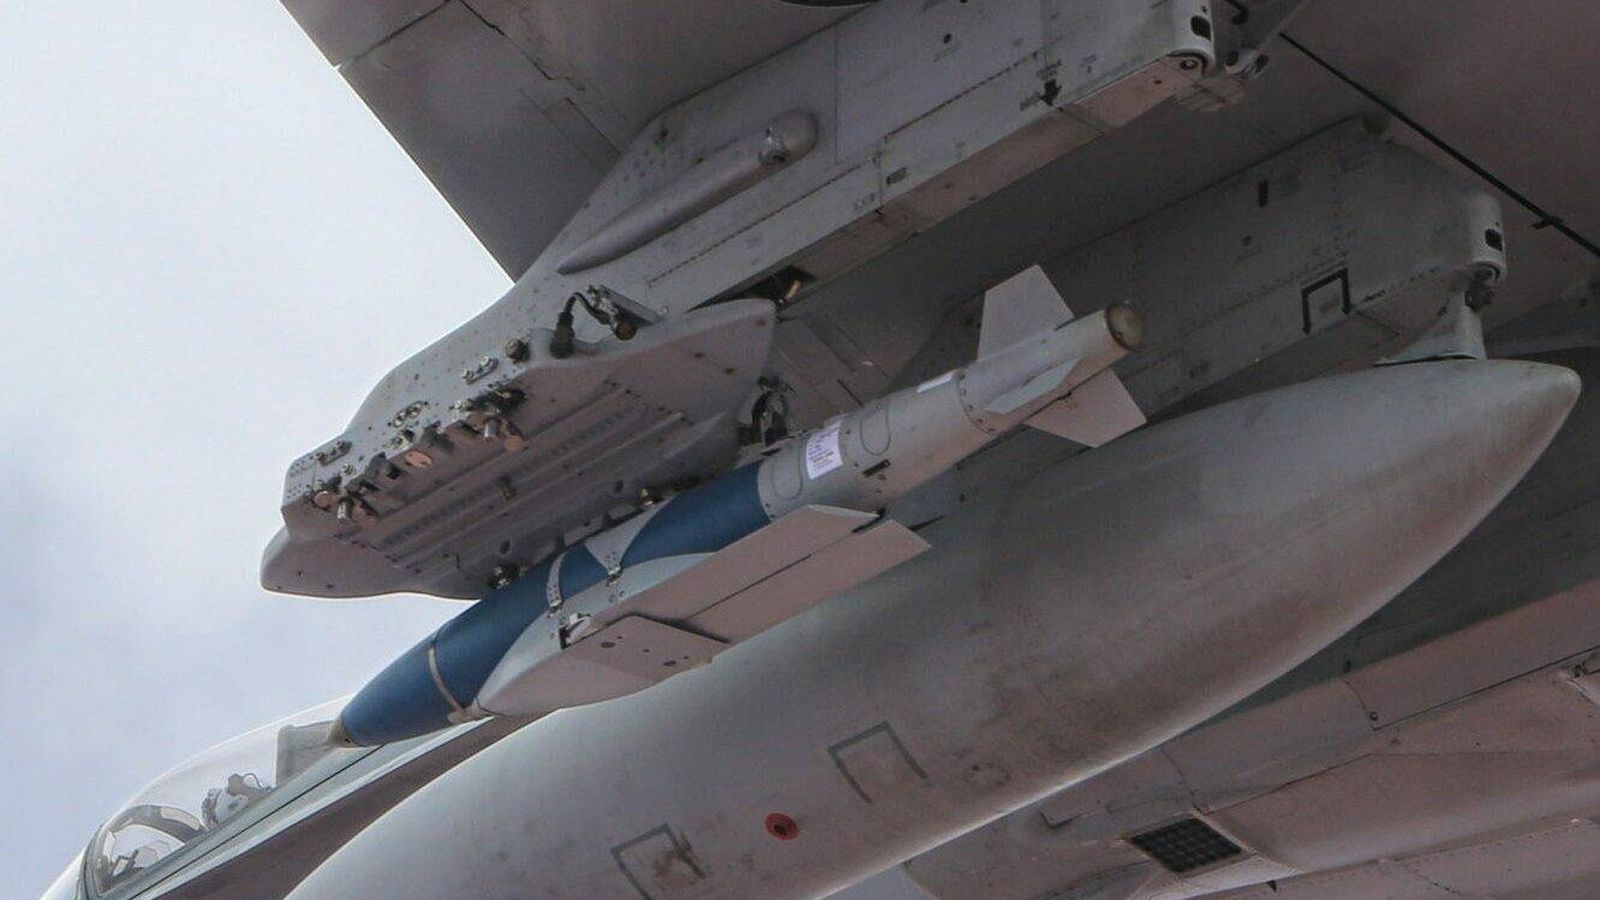 Bomba JDAM-ER bajo el ala de un F-18 australiano. (RAAF)